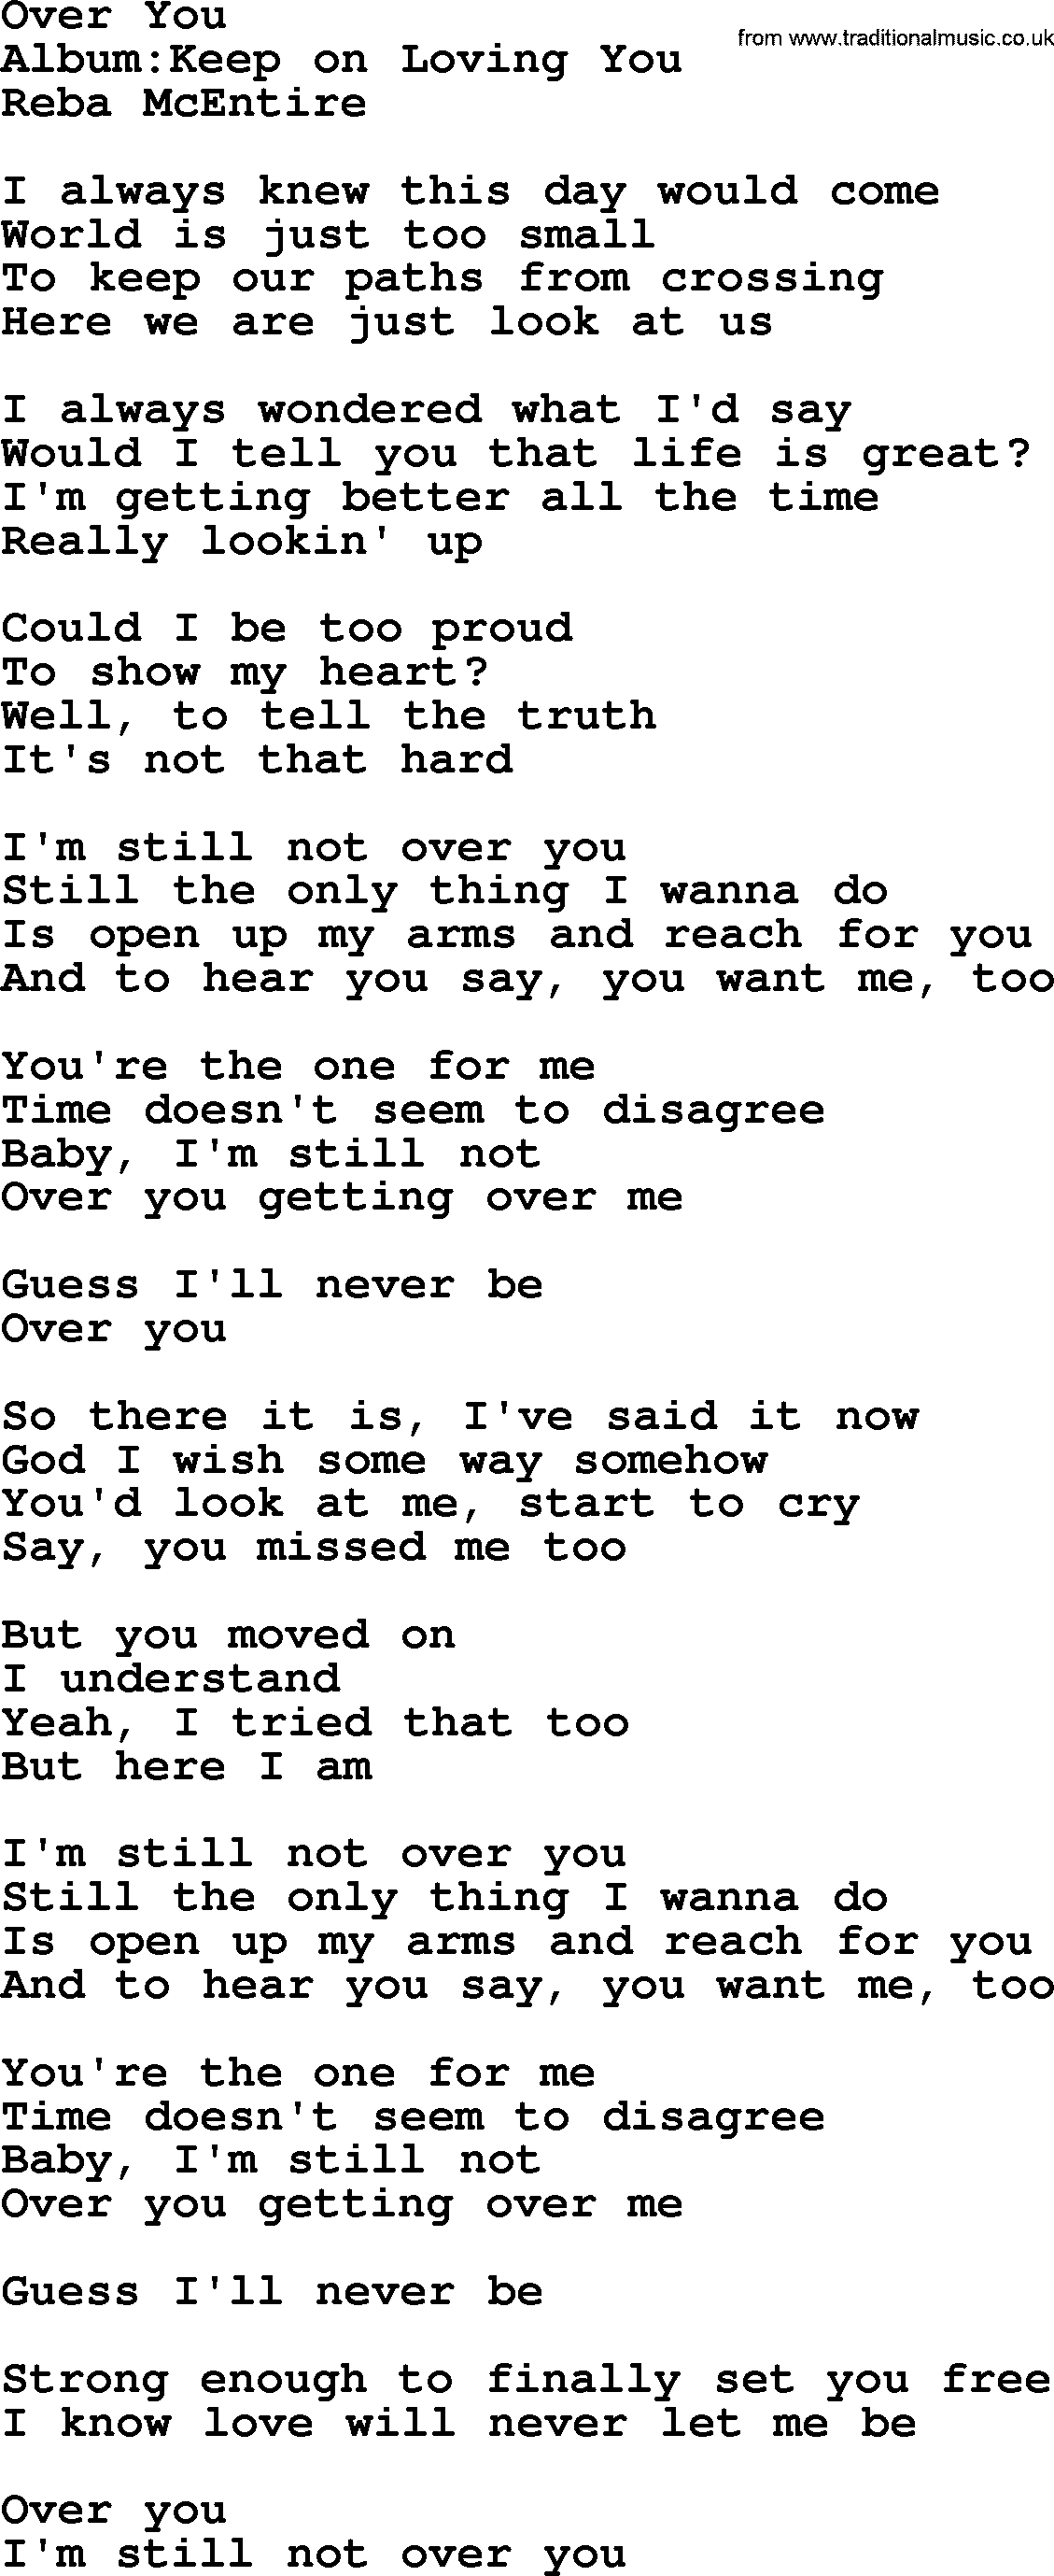 Reba McEntire song: Over You lyrics